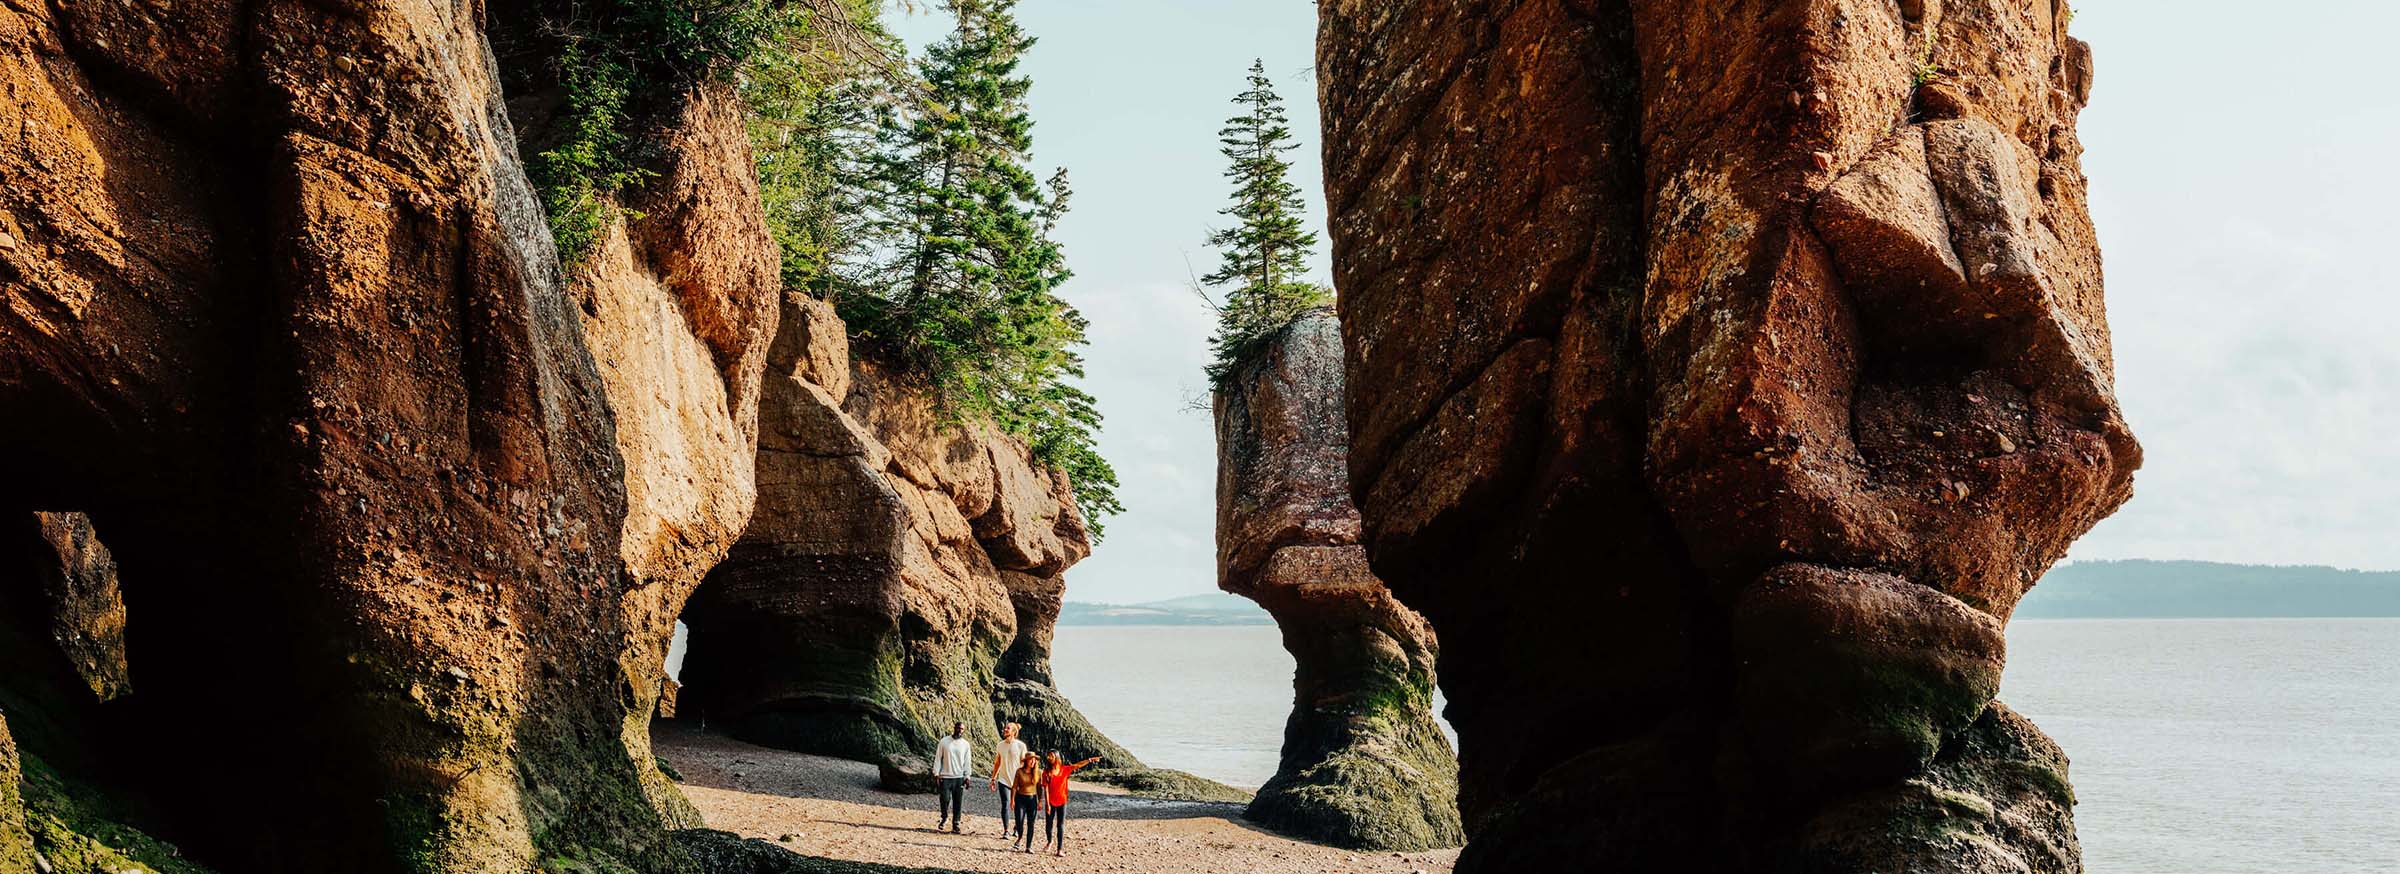 Family walking amongst treed coastal rock formations.